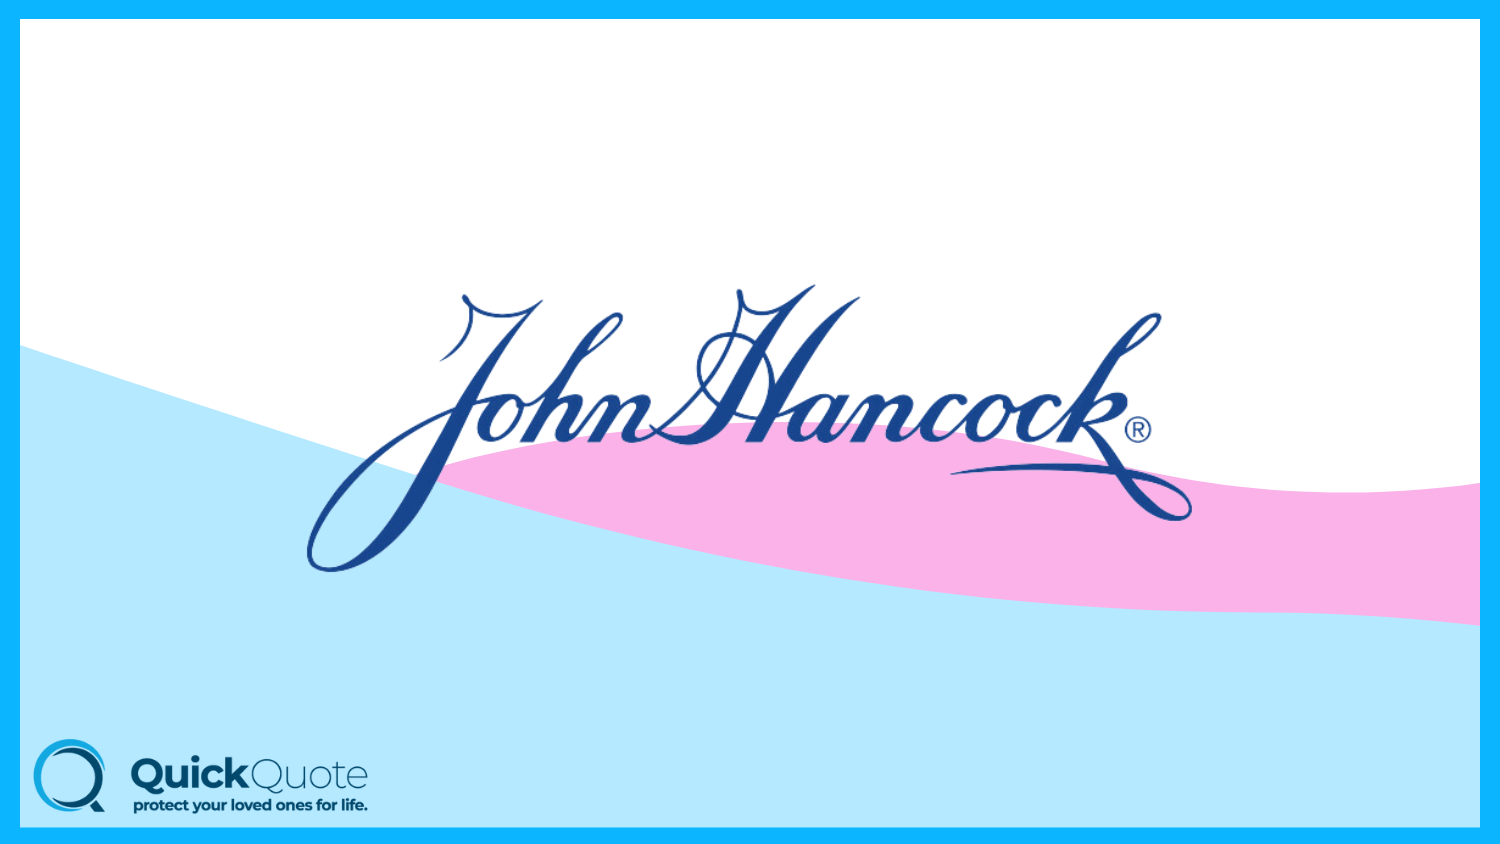 John Hancock: Best Life Insurance for Marijuana Users